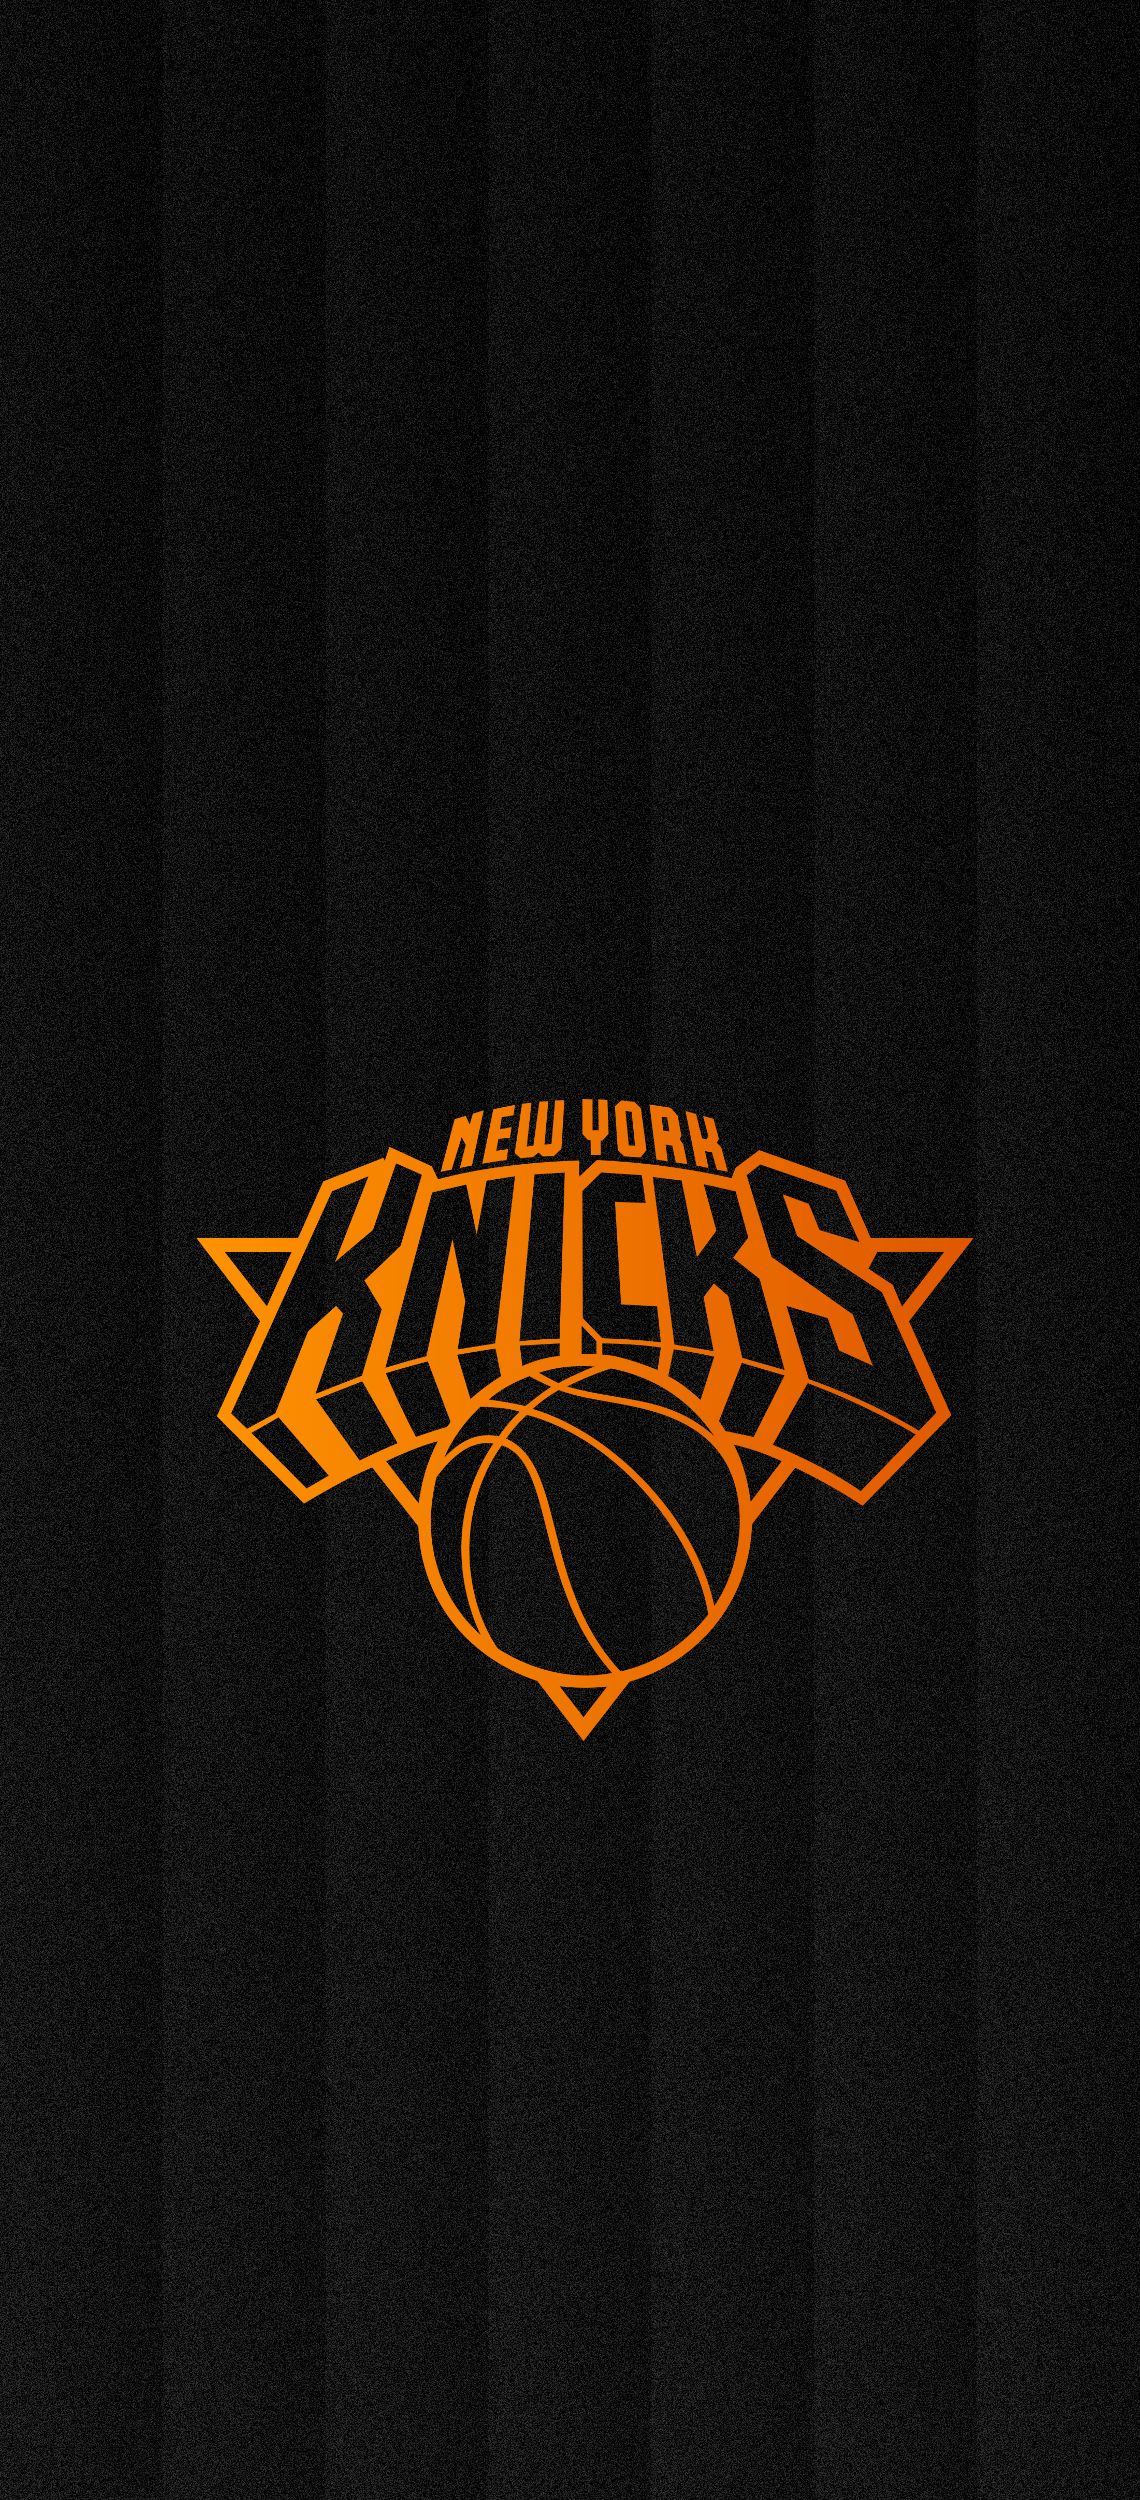 New York Knicks 2019-20 City Jersey by llu258 on DeviantArt